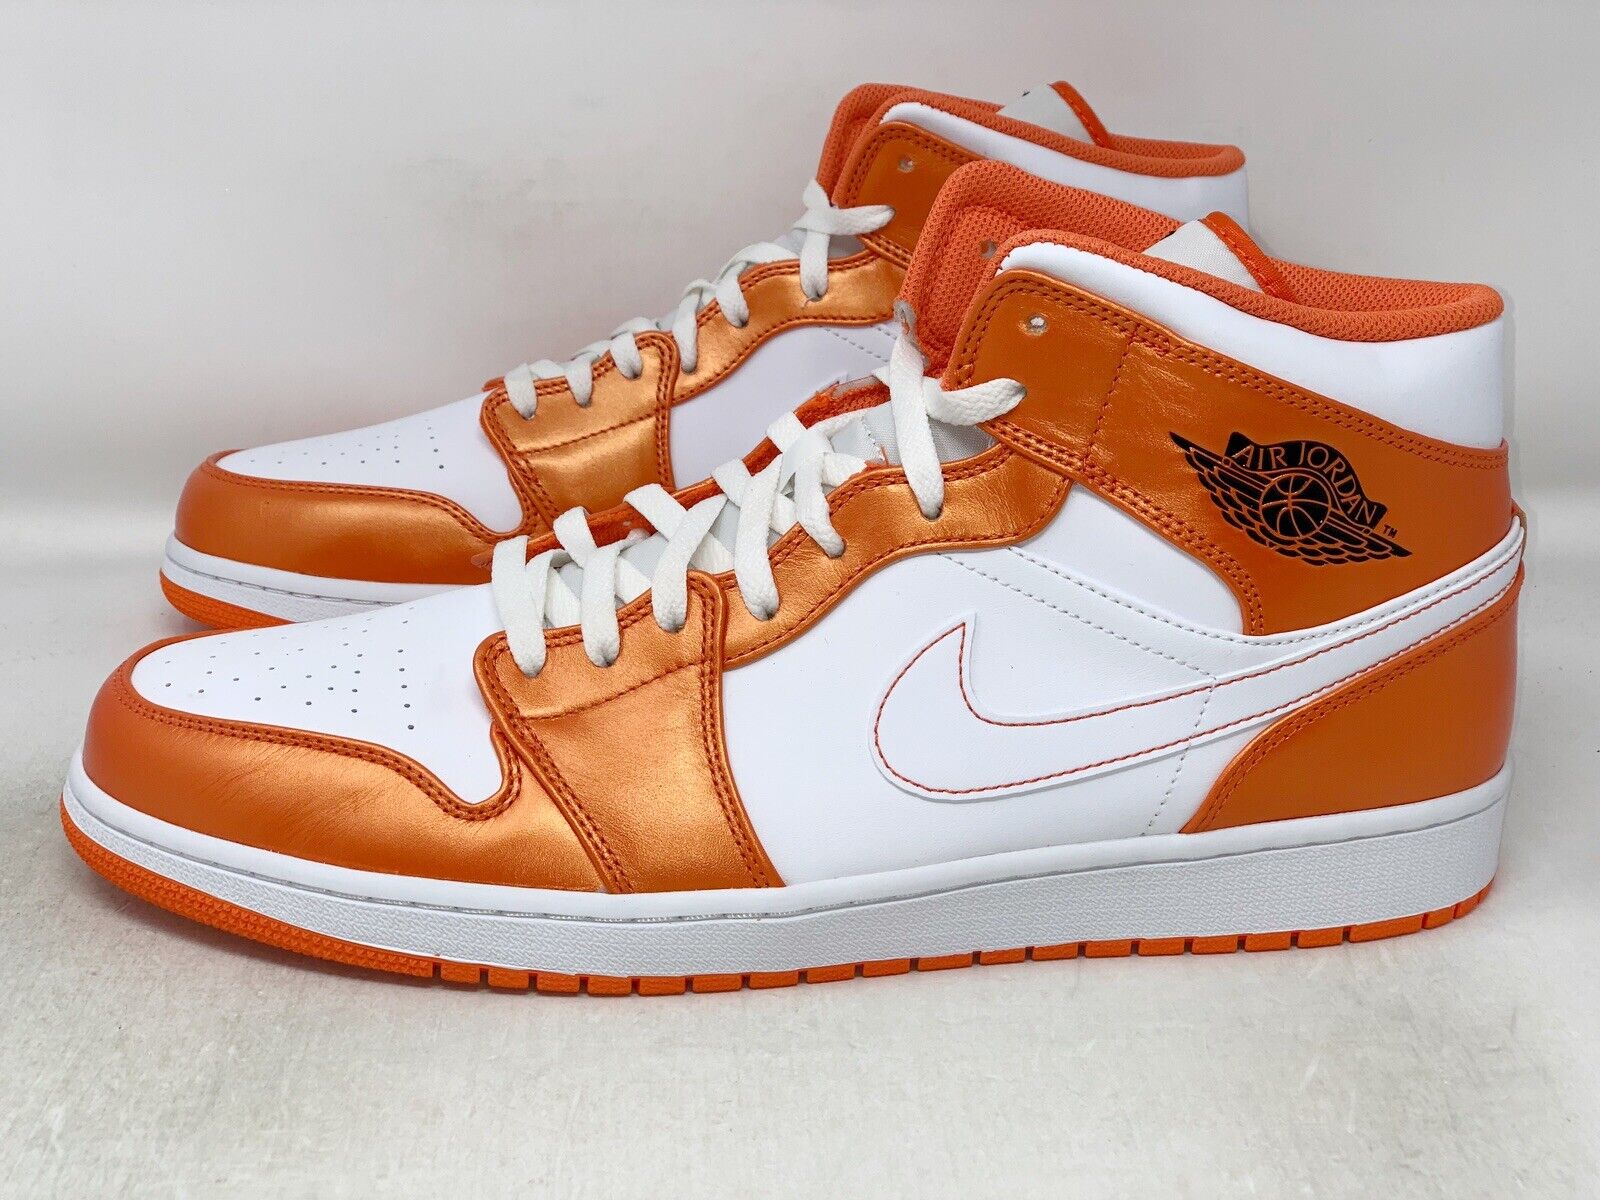 Air Jordan 1 Mid Electro Metallic Orange Sneaker, Size 16 BNIB DM3531-800